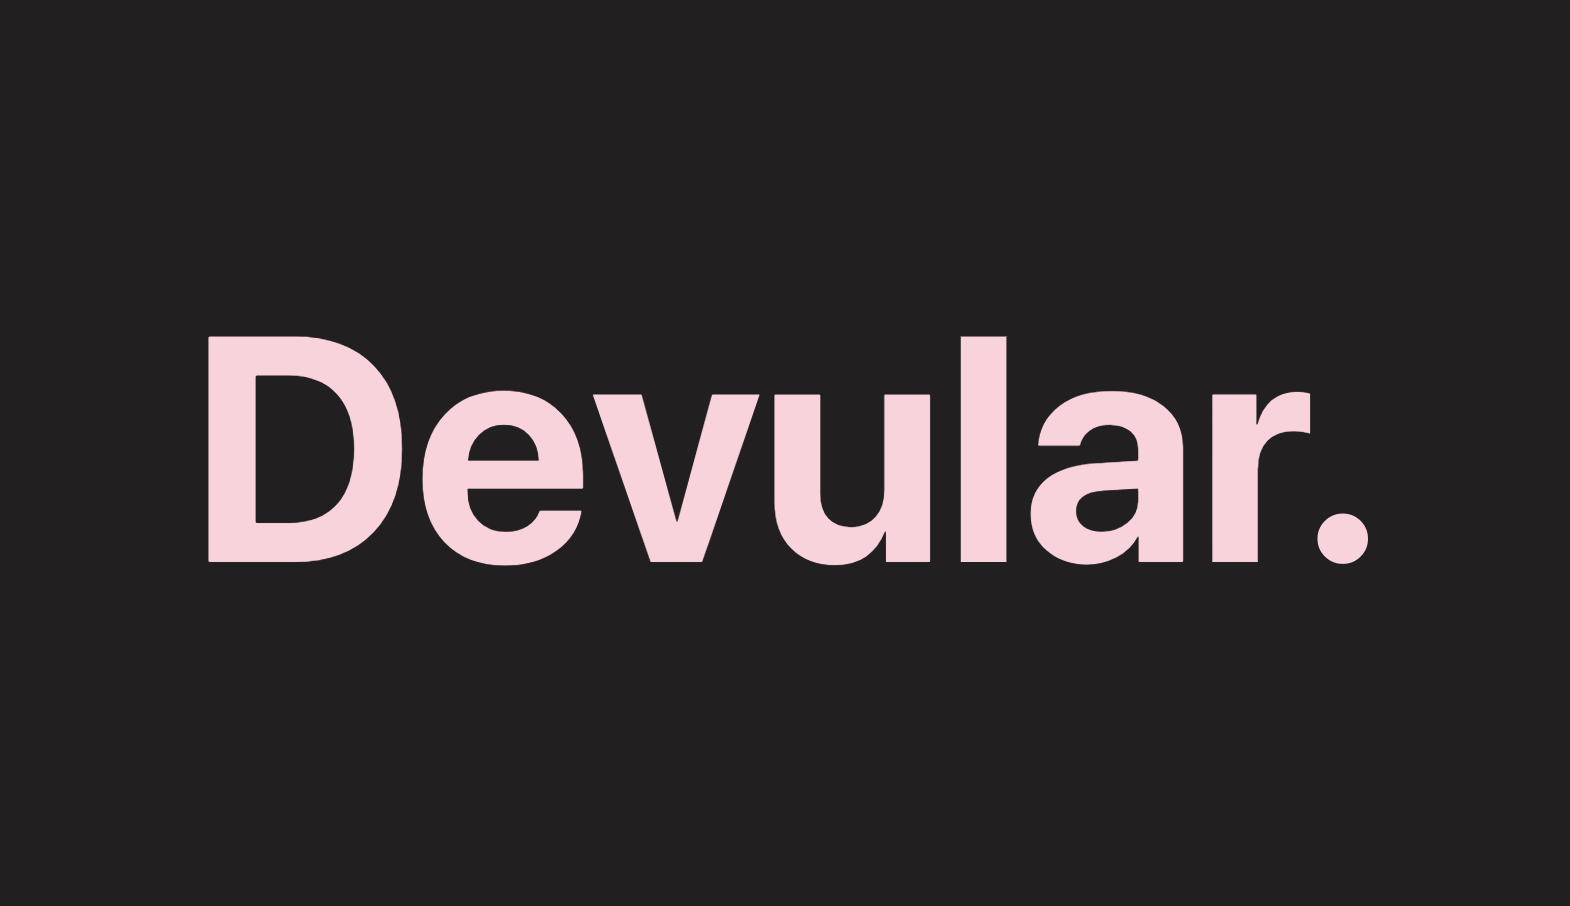 Devular